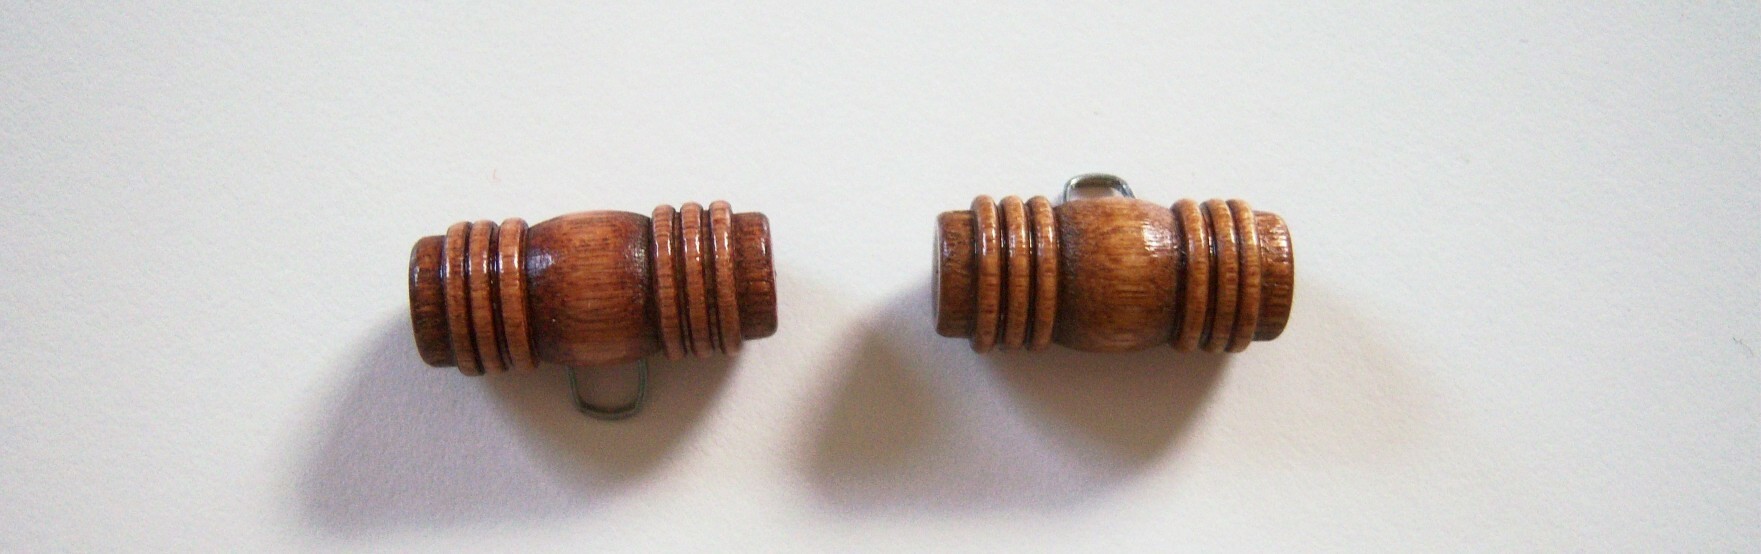 Walnut wood toggle button.